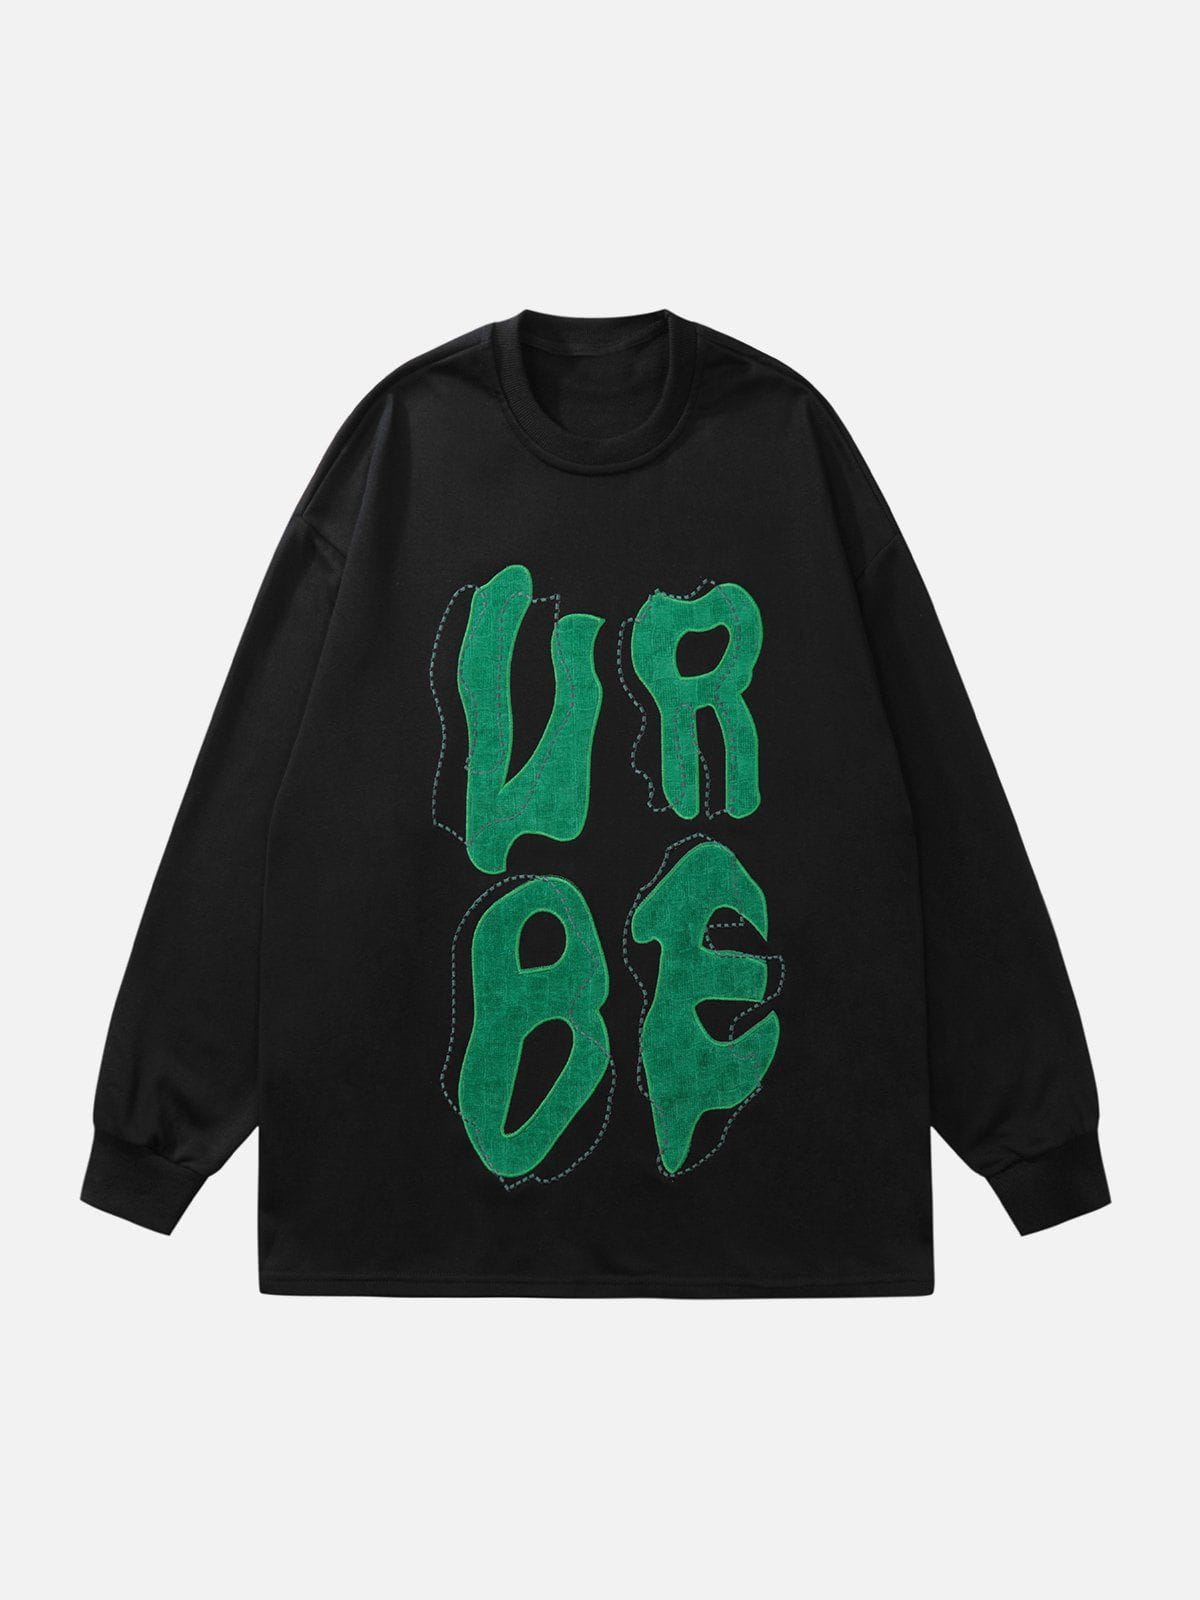 LUXENFY™ - "URBE” Print Sweatshirt luxenfy.com